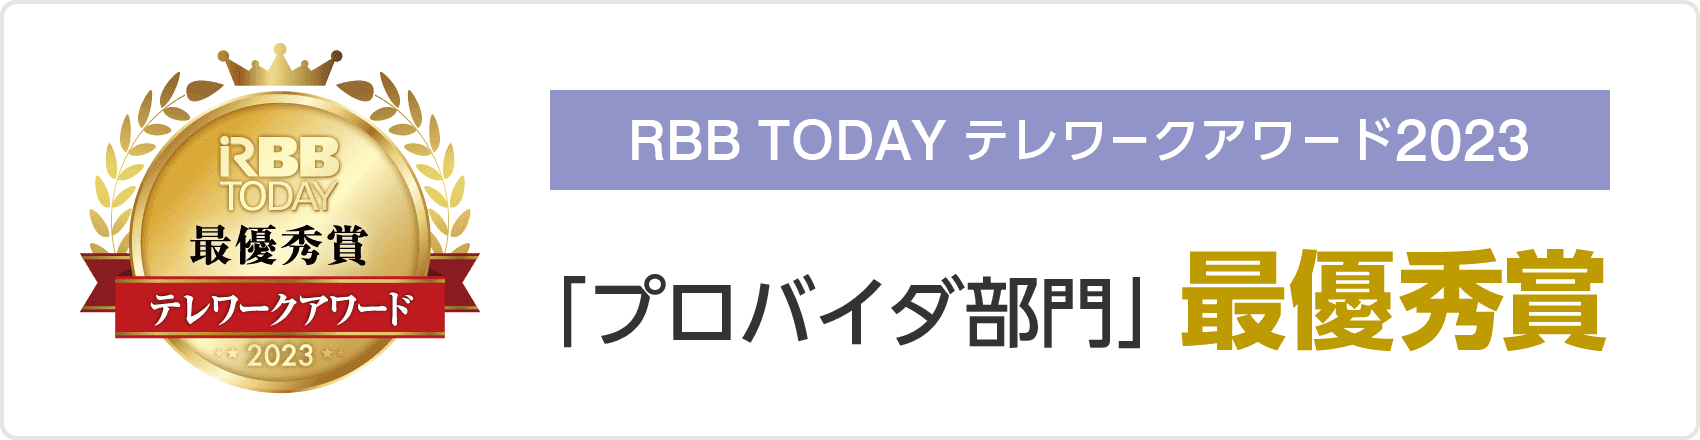 RBB TODAY テレワークアワード 「プロバイダ部門」最優秀賞